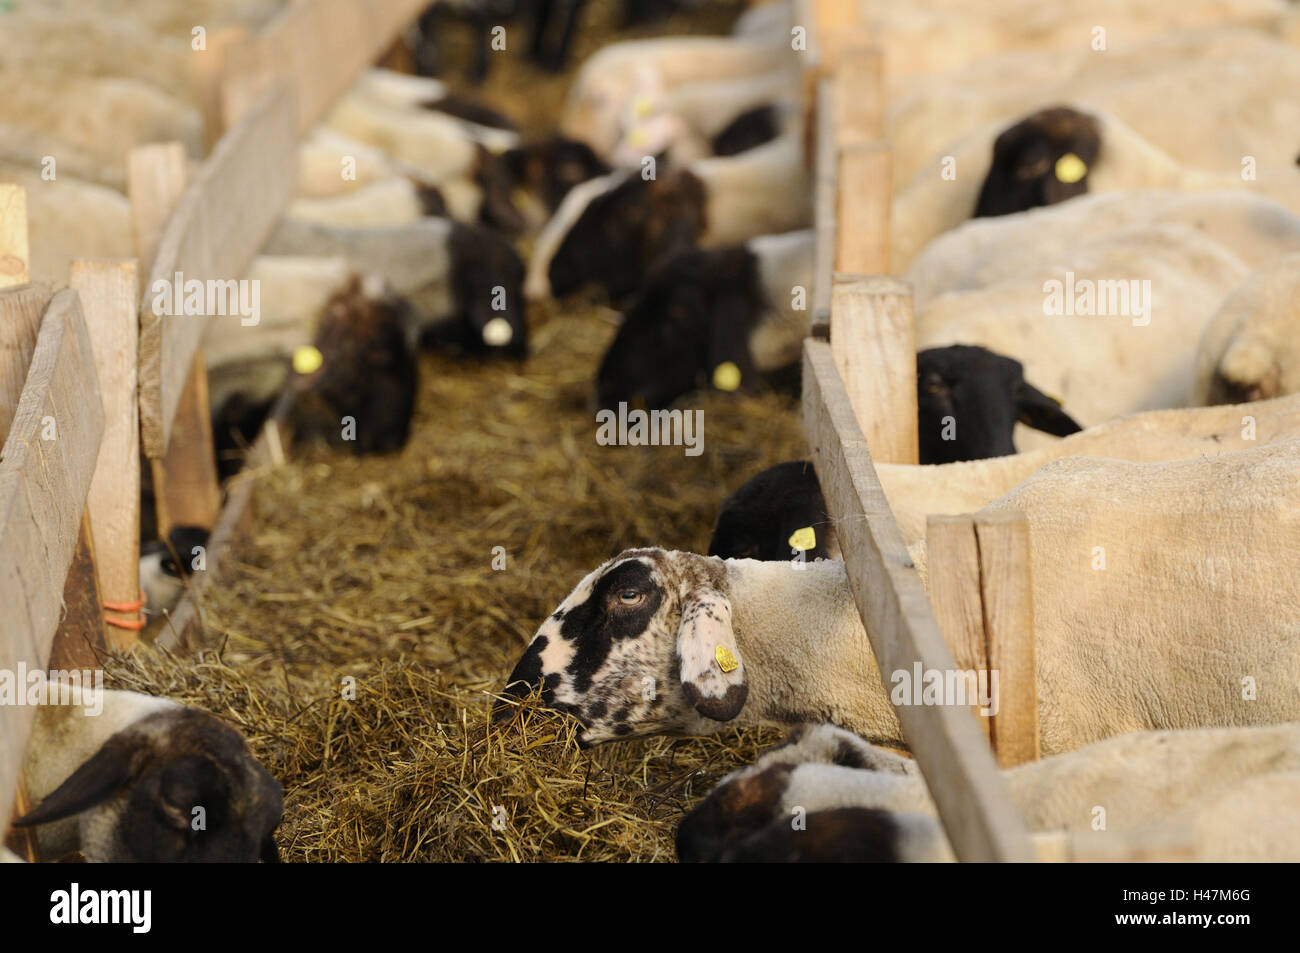 Suffolk sheep, Domestic sheep, Ovis orientalis aries, Stock Photo